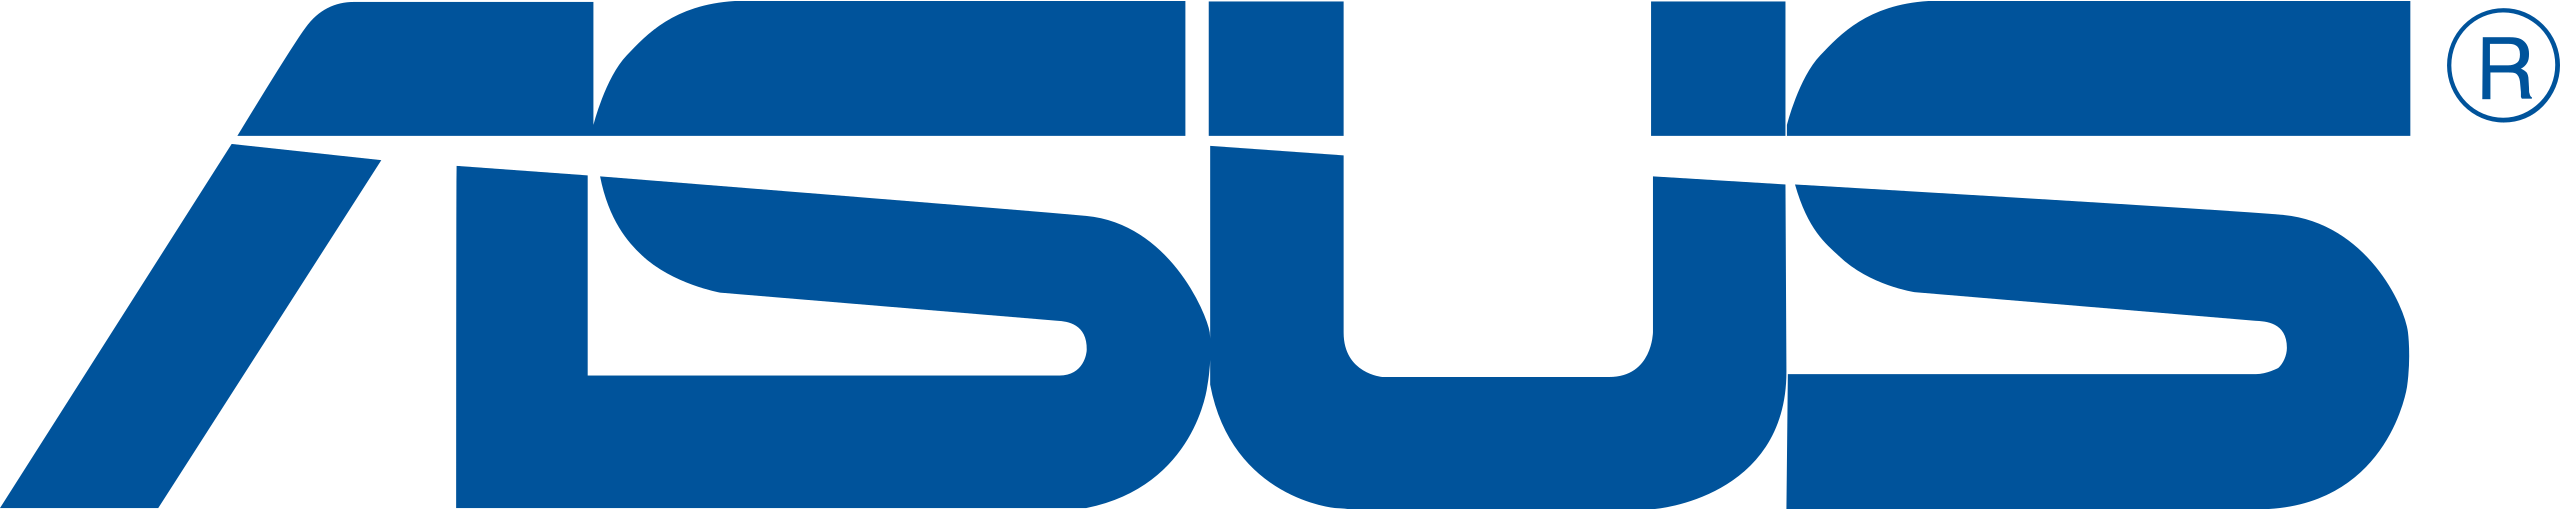 Asus Company Logo Blue Background